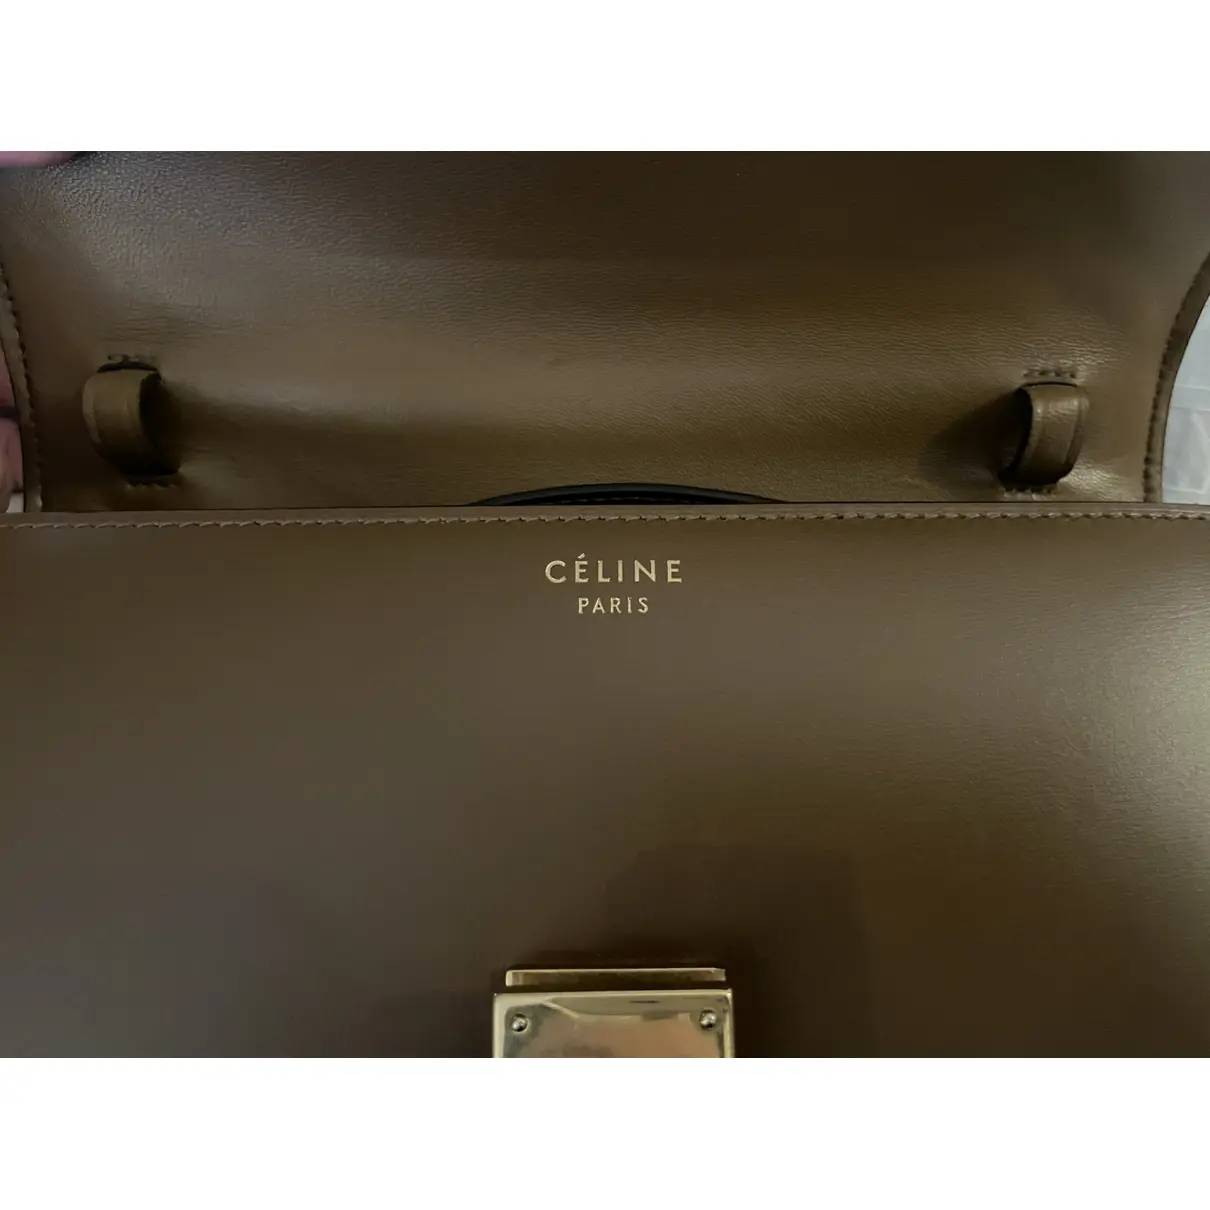 Classic leather crossbody bag Celine